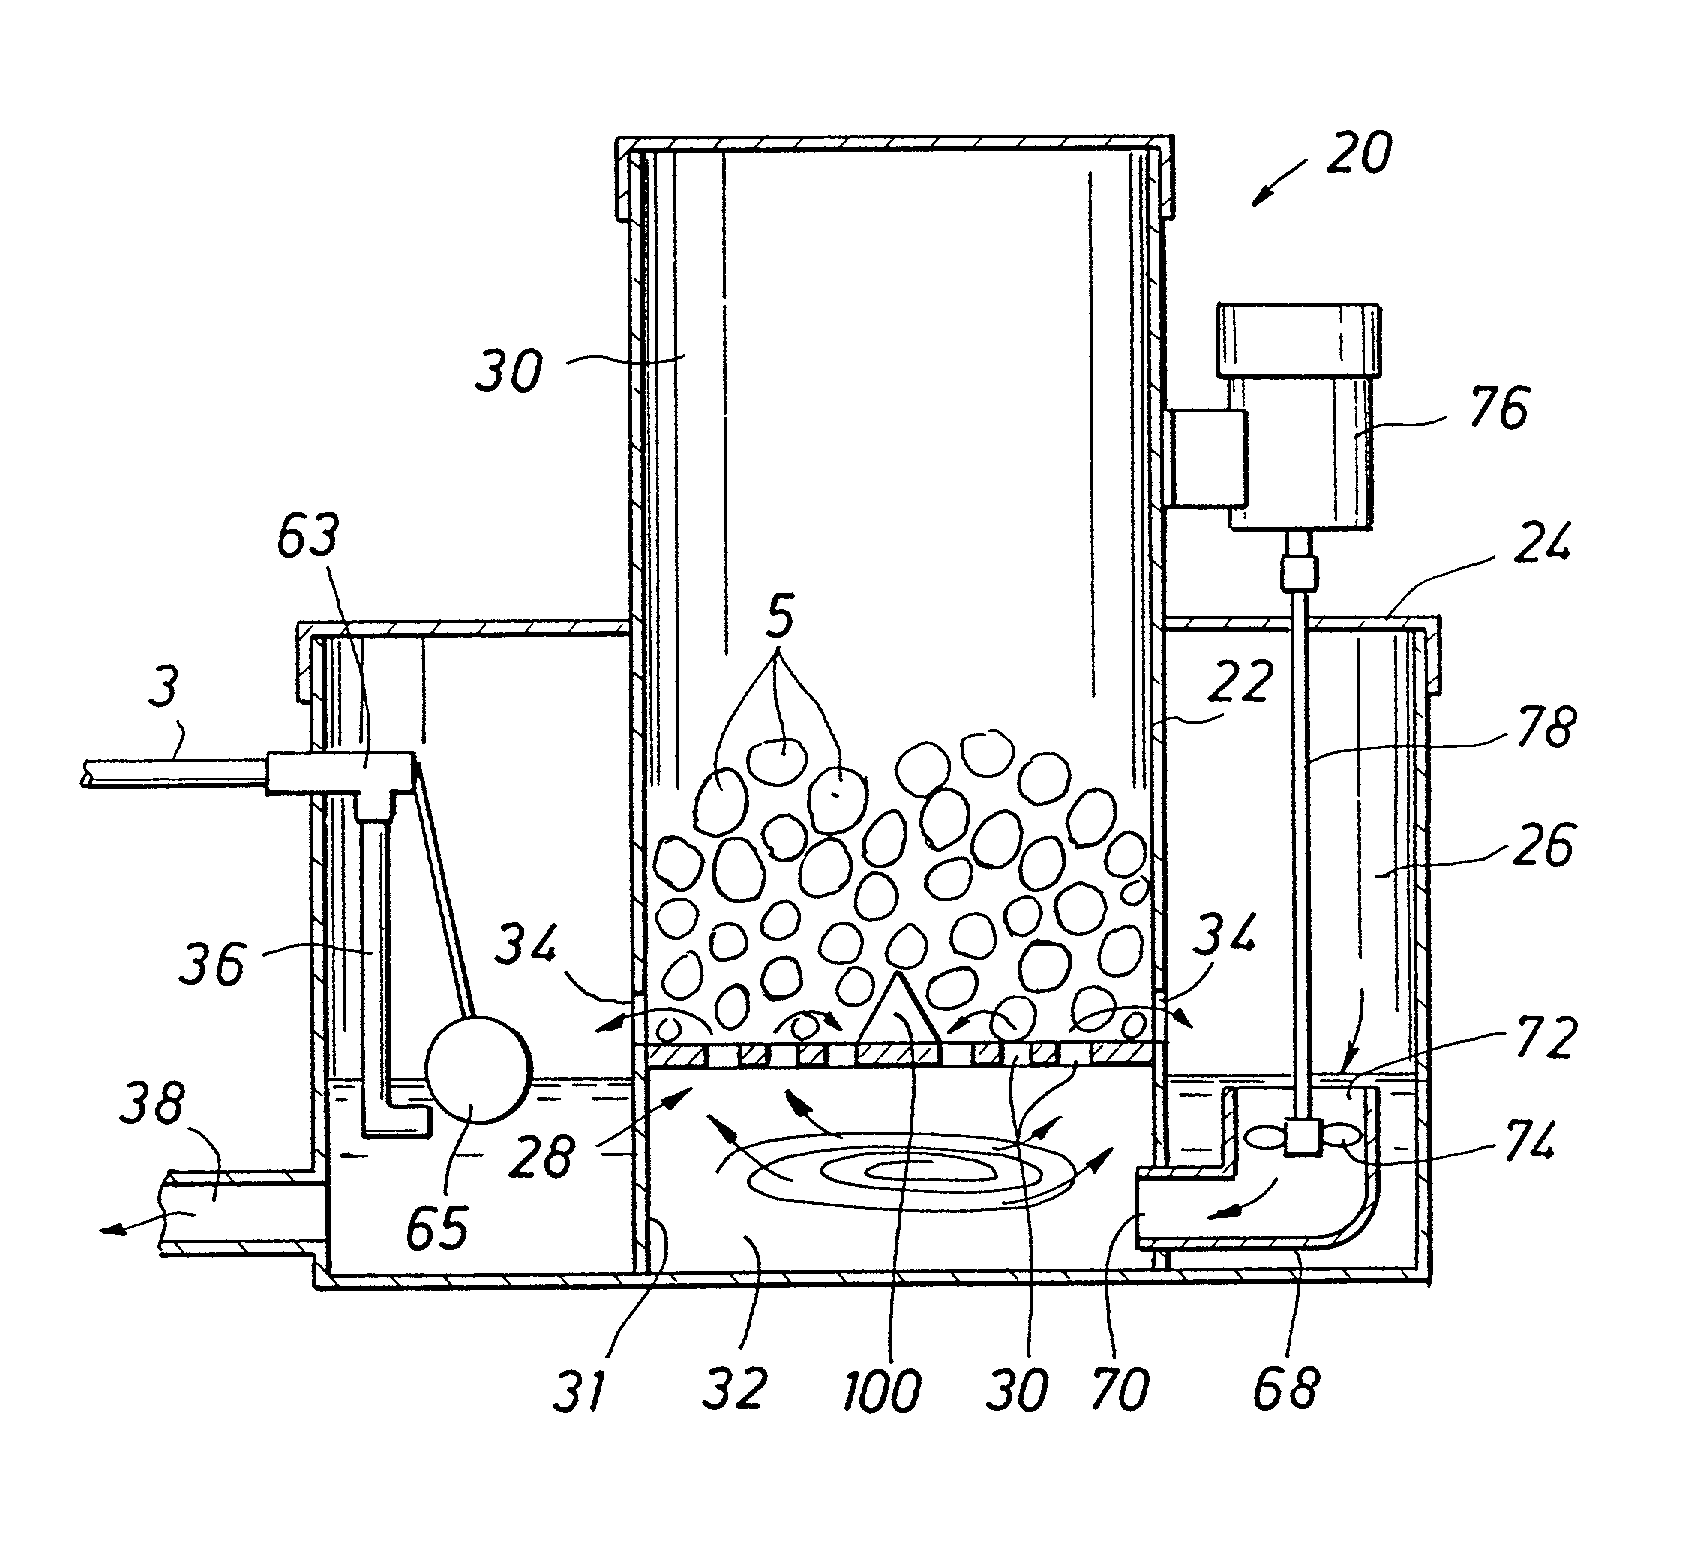 Chlorination apparatus and method